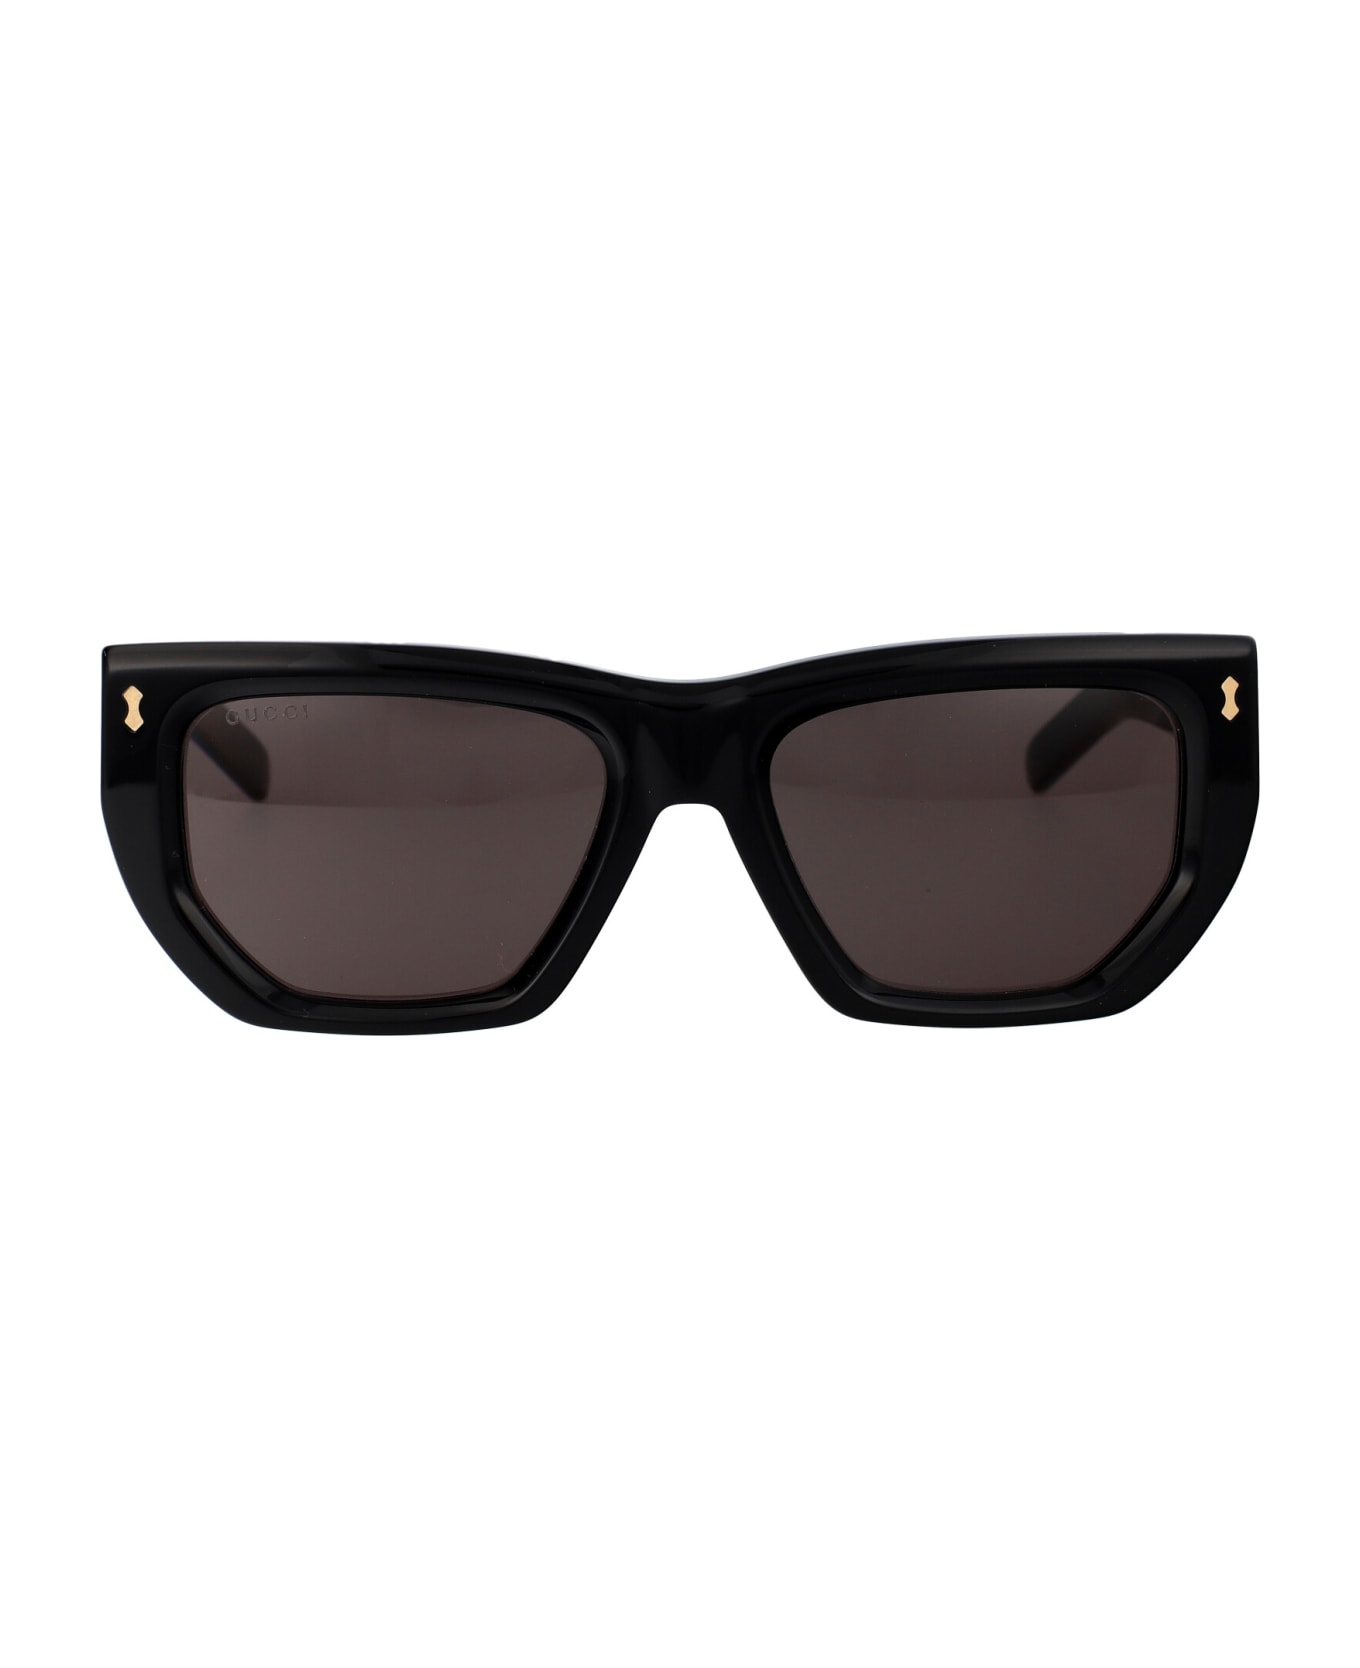 Gucci Eyewear Gg1520s Sunglasses - 001 BLACK BLACK GREY